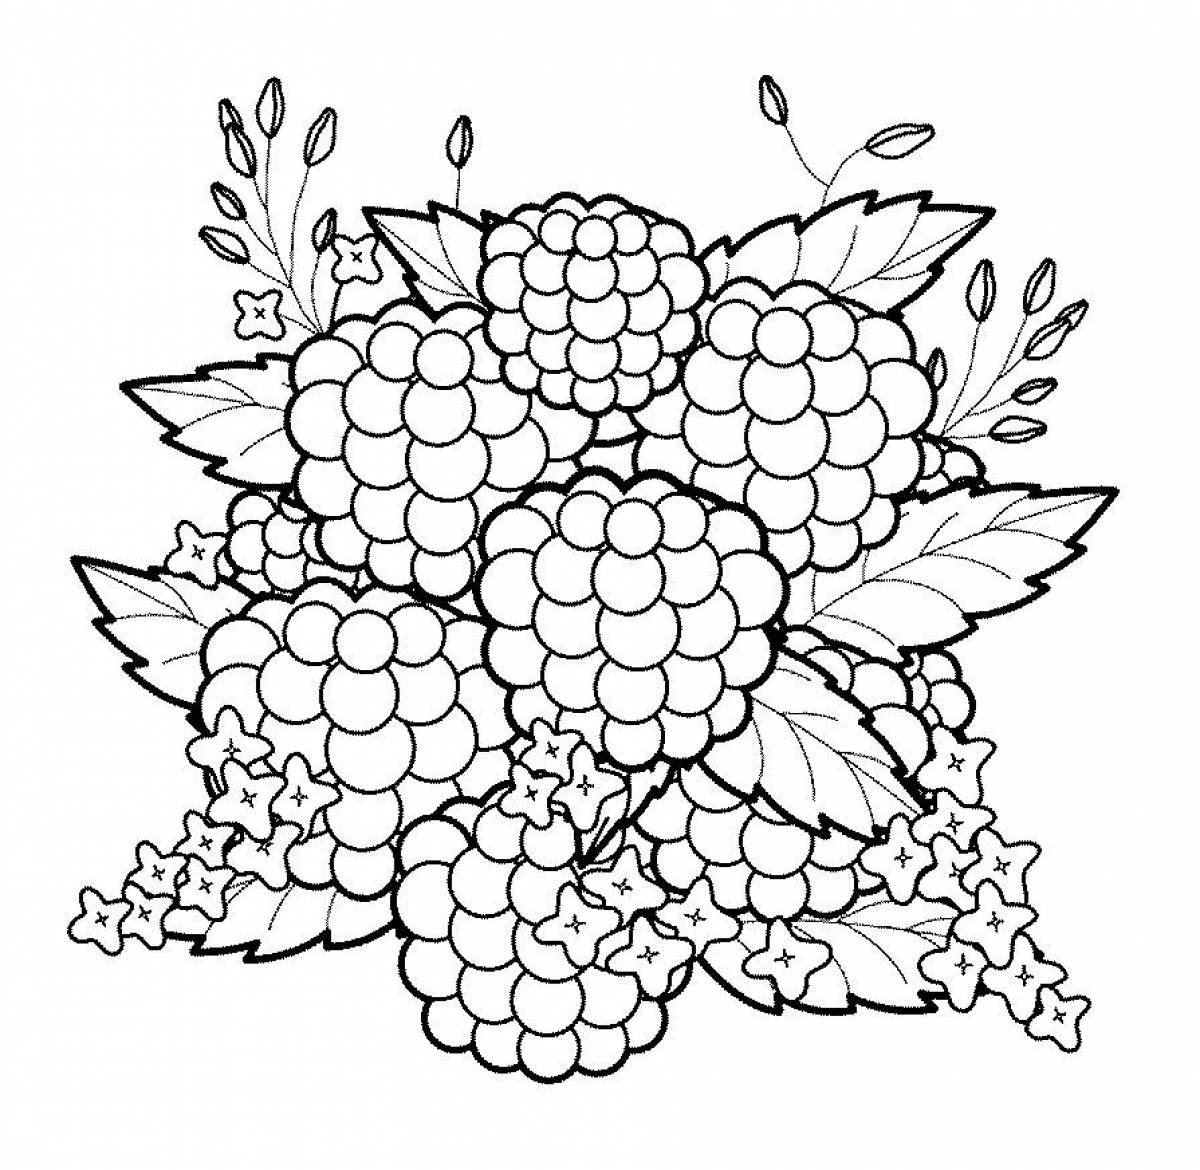 Raspberry drawing